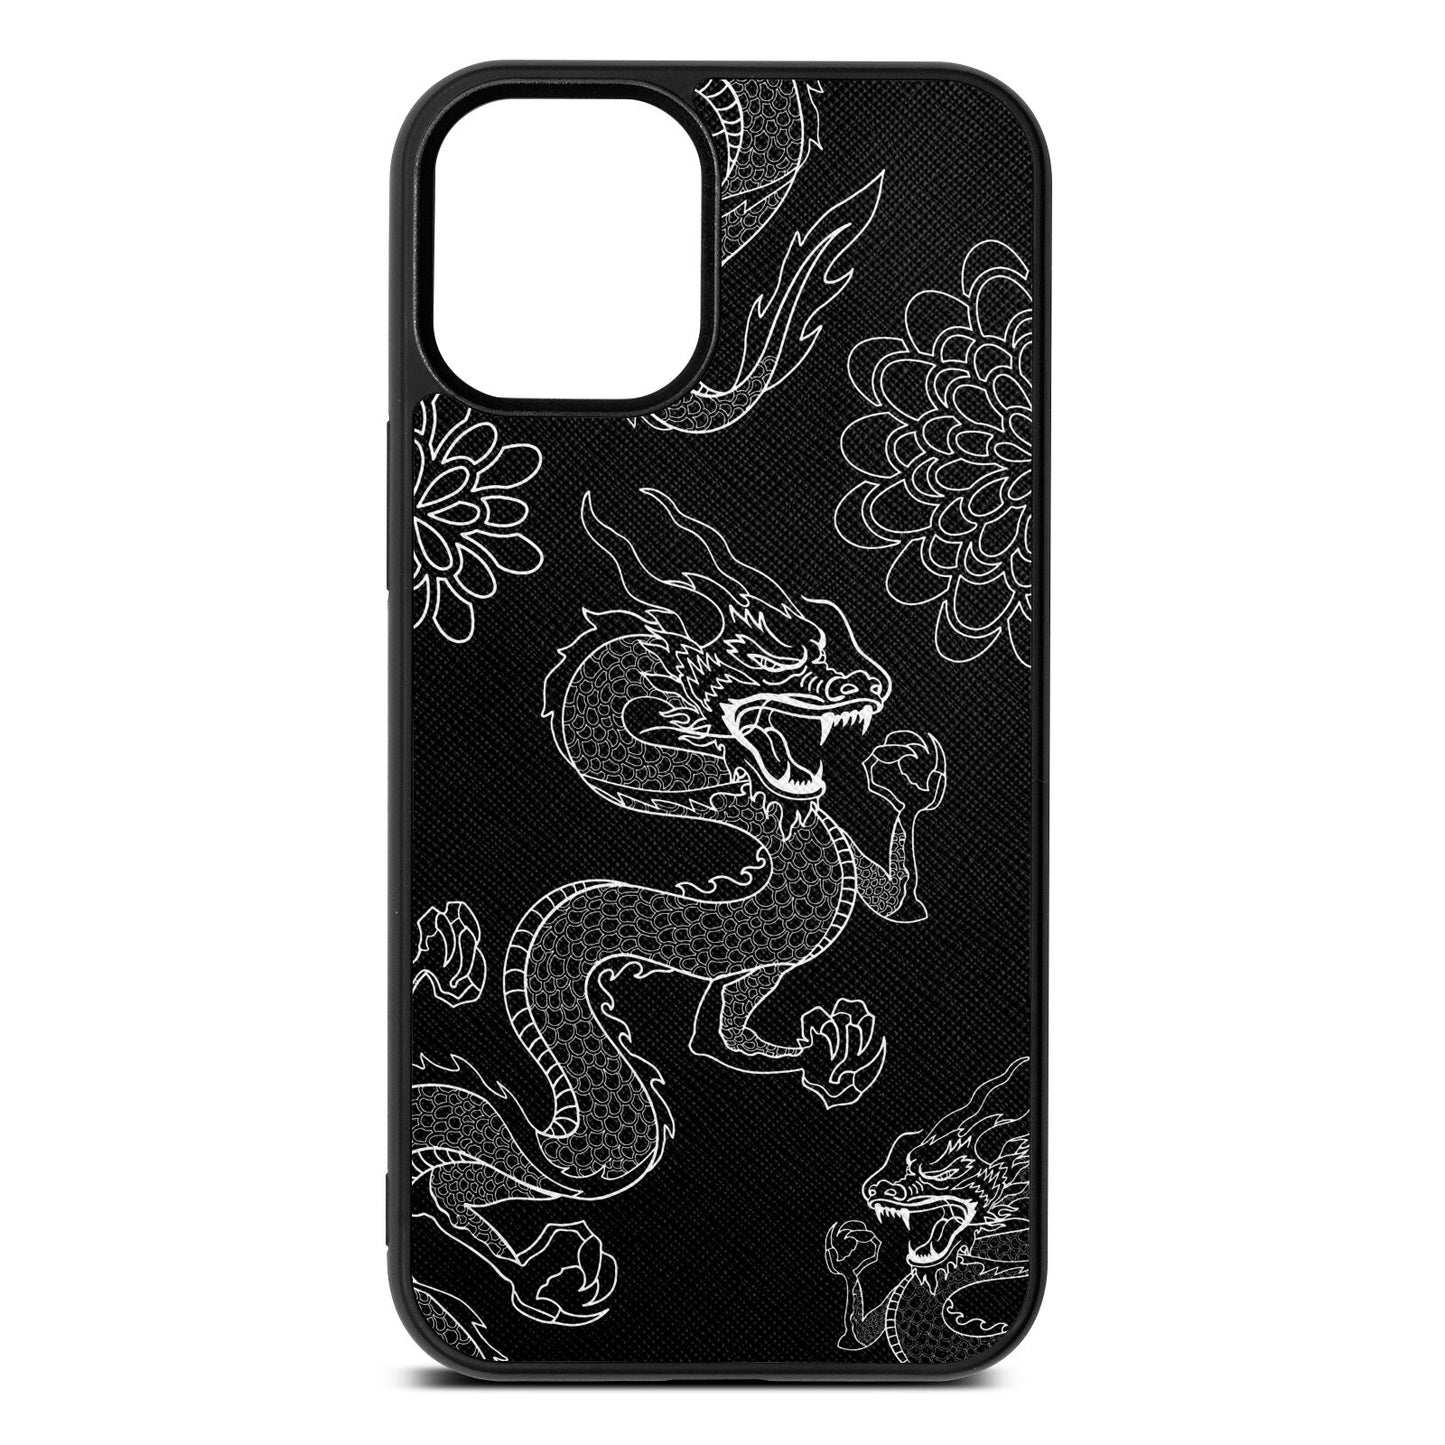 Dragons Black Saffiano Leather iPhone 12 Mini Case